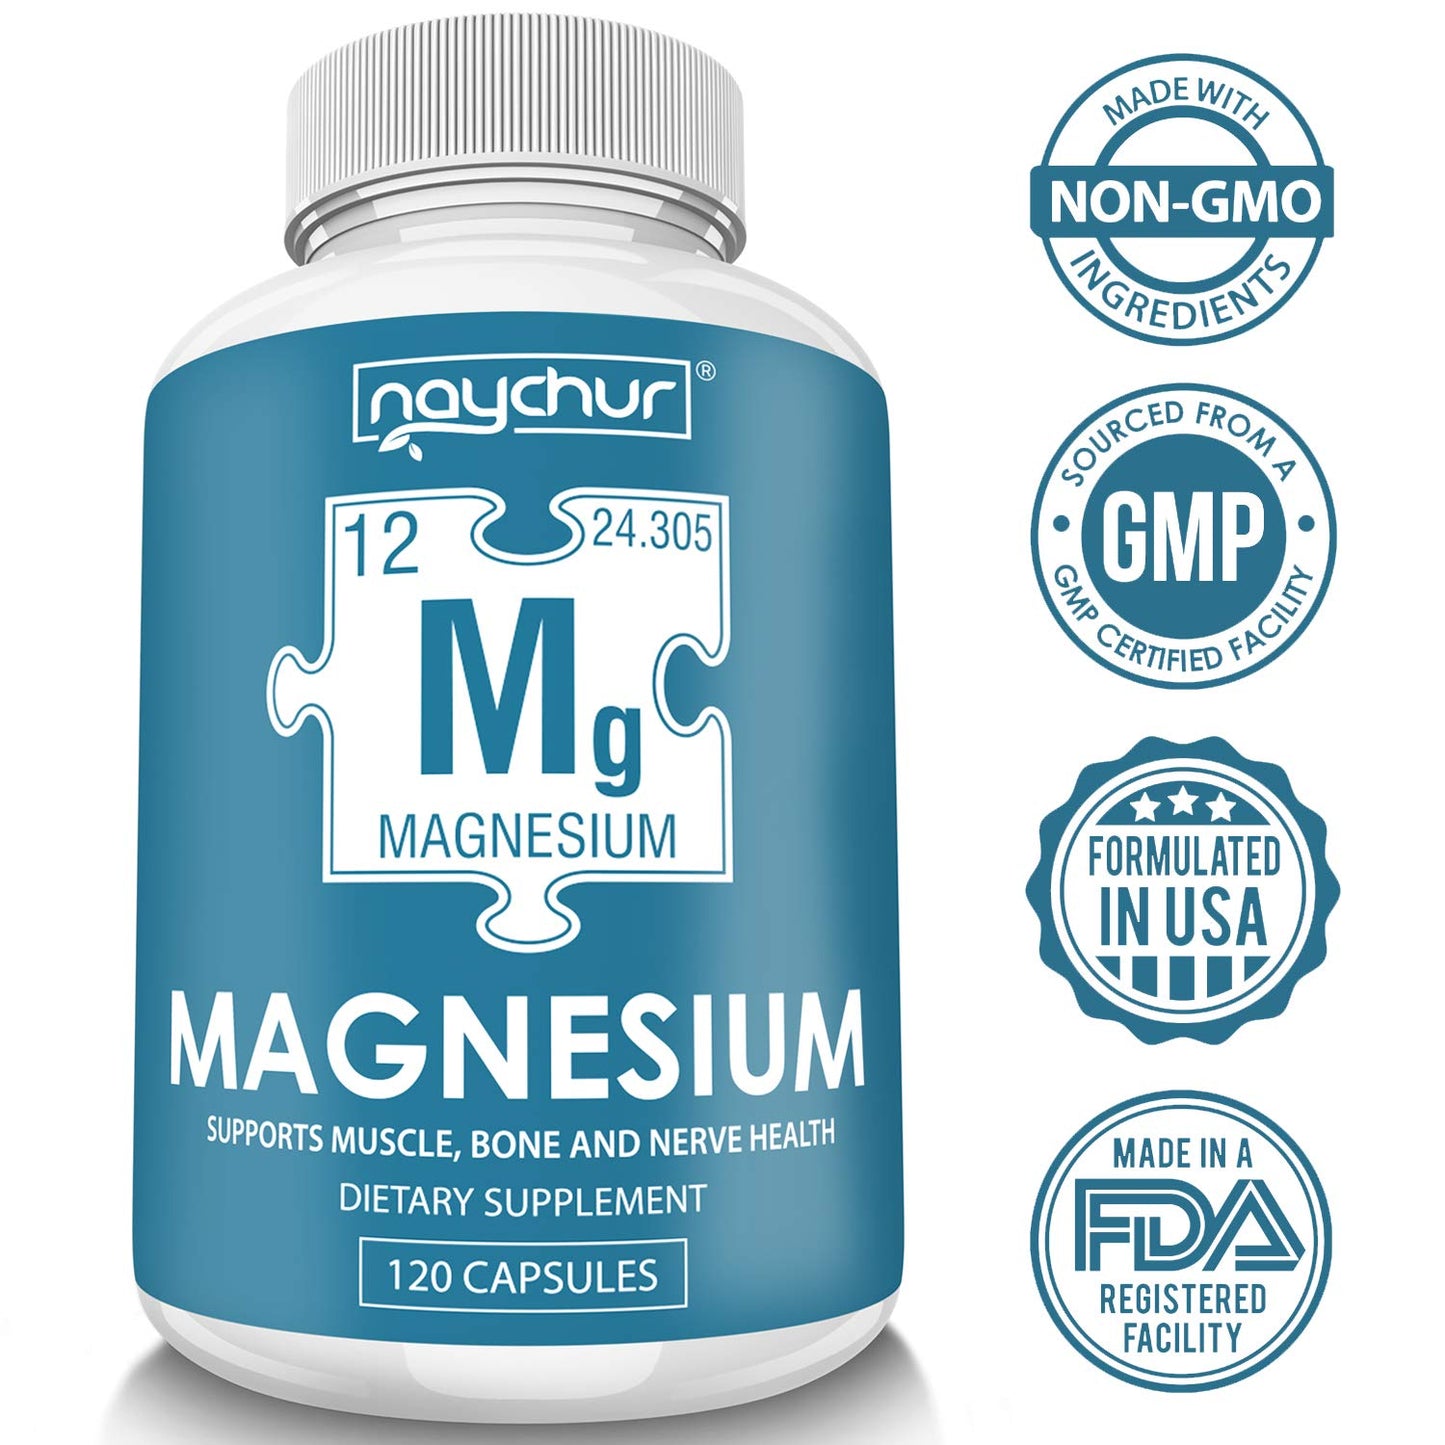 Naychur Magnesium 500mg Non-GMO 120 Vegetable Capsules